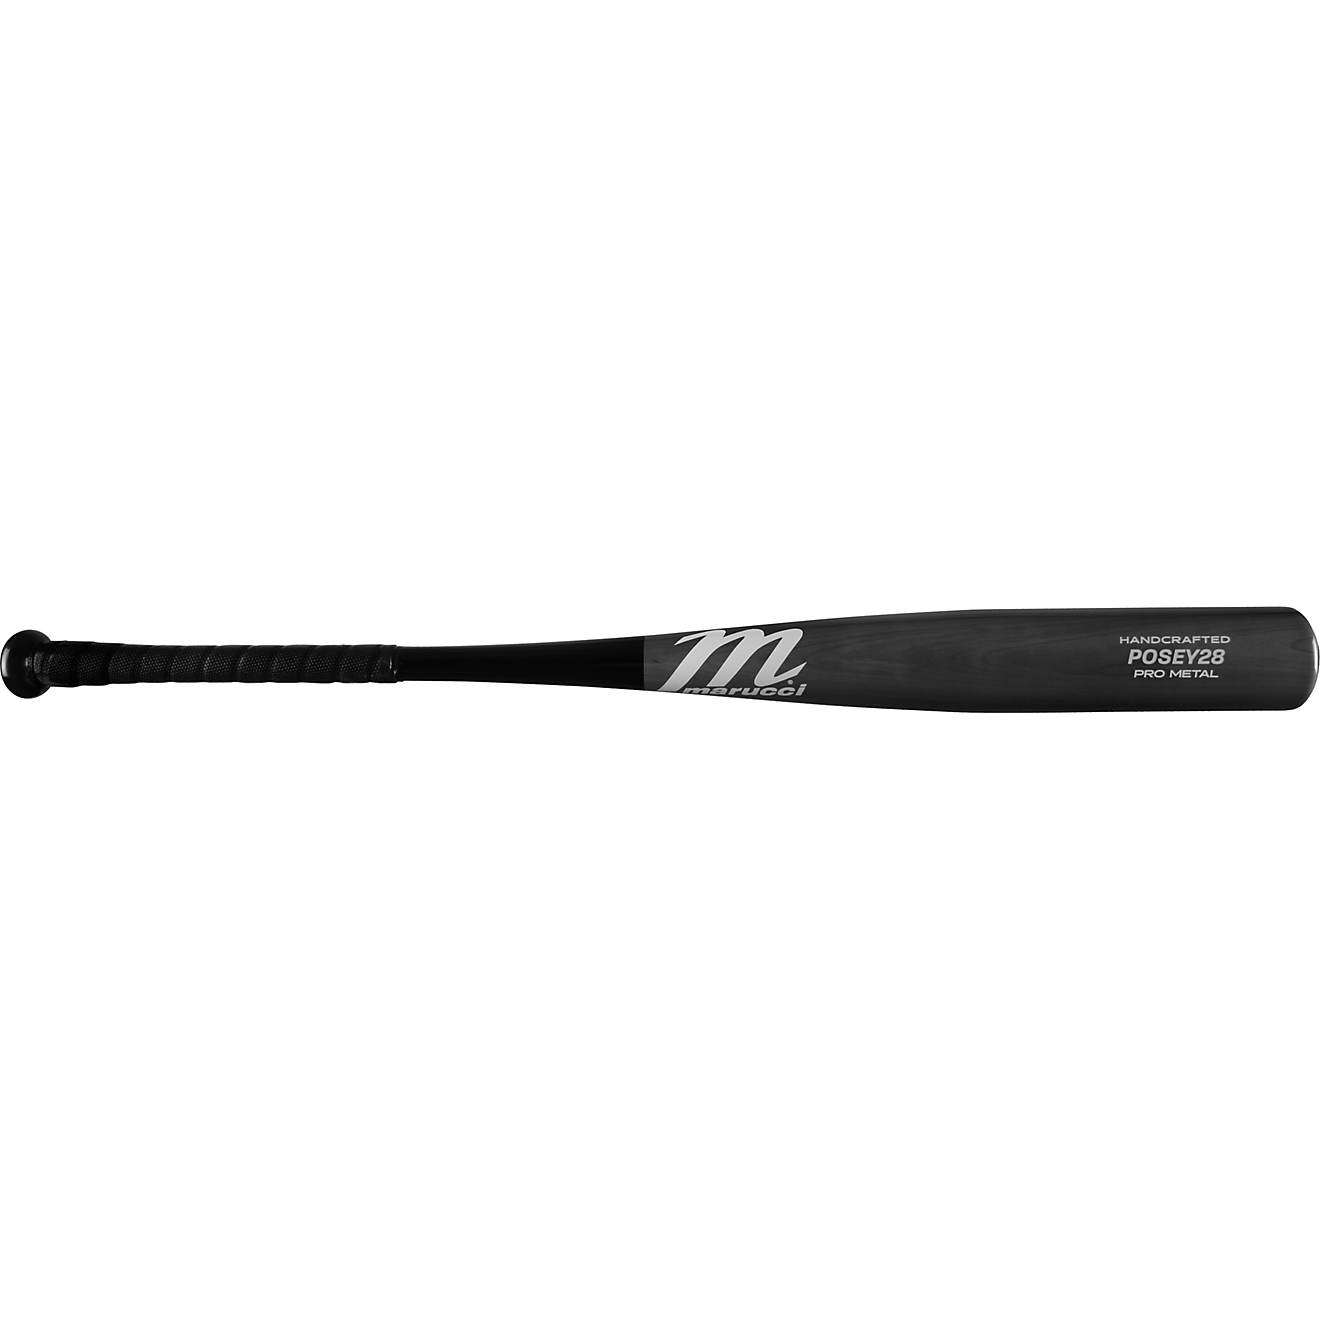 MCBP28S -3 BBCOR Baseball Bat 2020 Marucci Posey28 Pro Metal SMOKE 